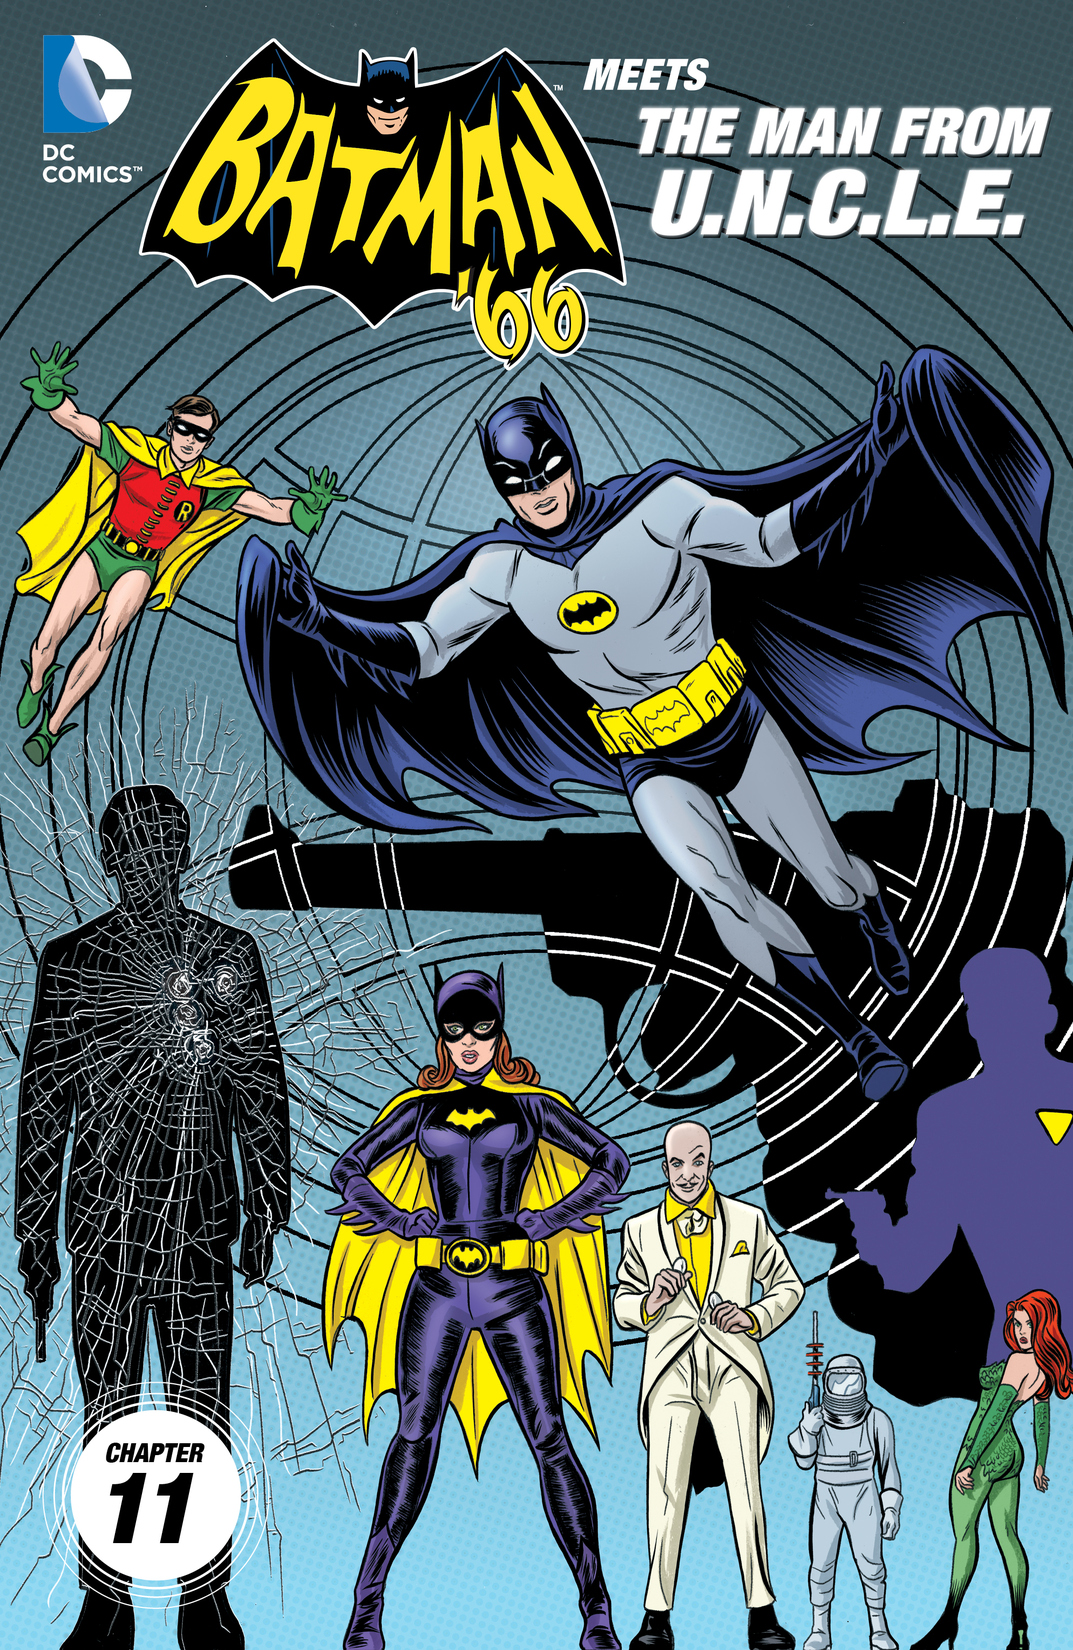 Batman '66 Meets The Man From U.N.C.L.E. #11 preview images